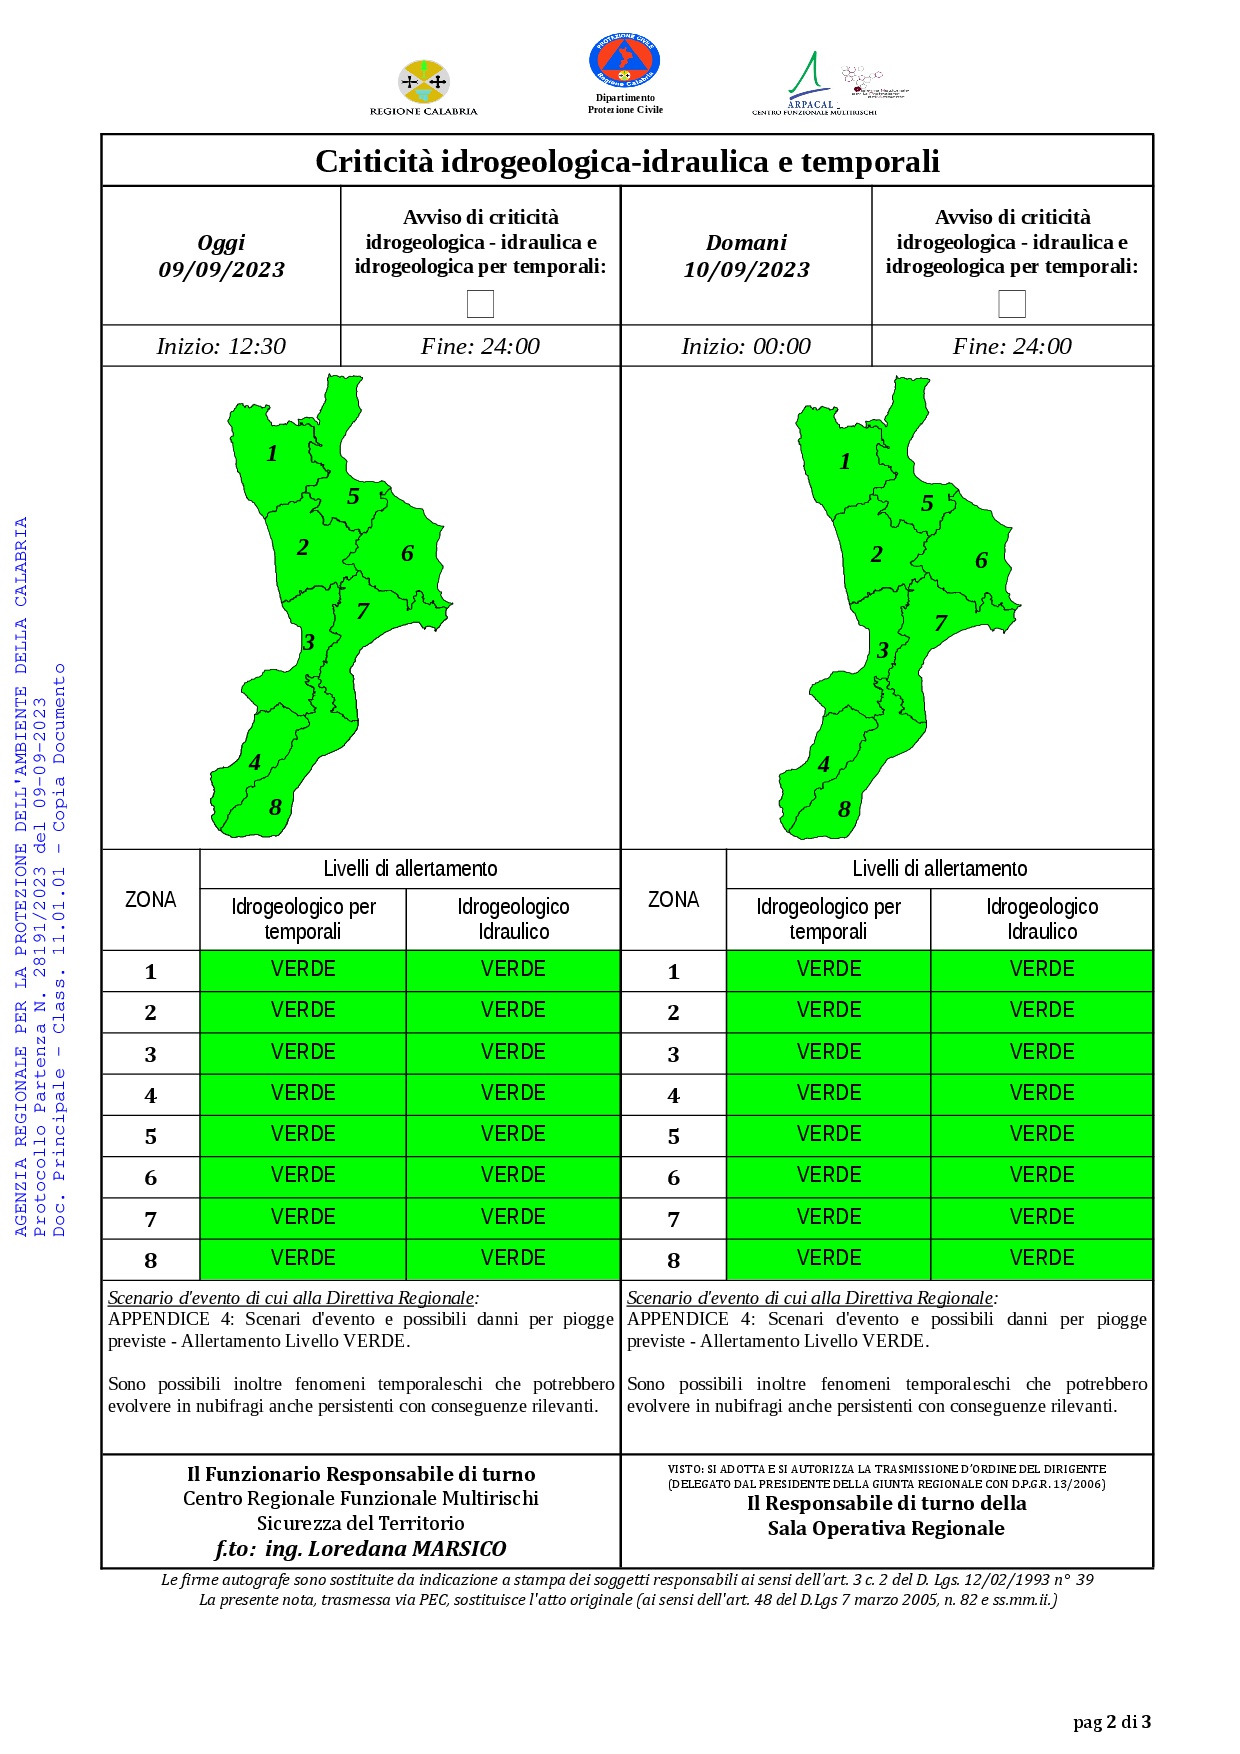 Criticità idrogeologica-idraulica e temporali in Calabria 09-09-2023